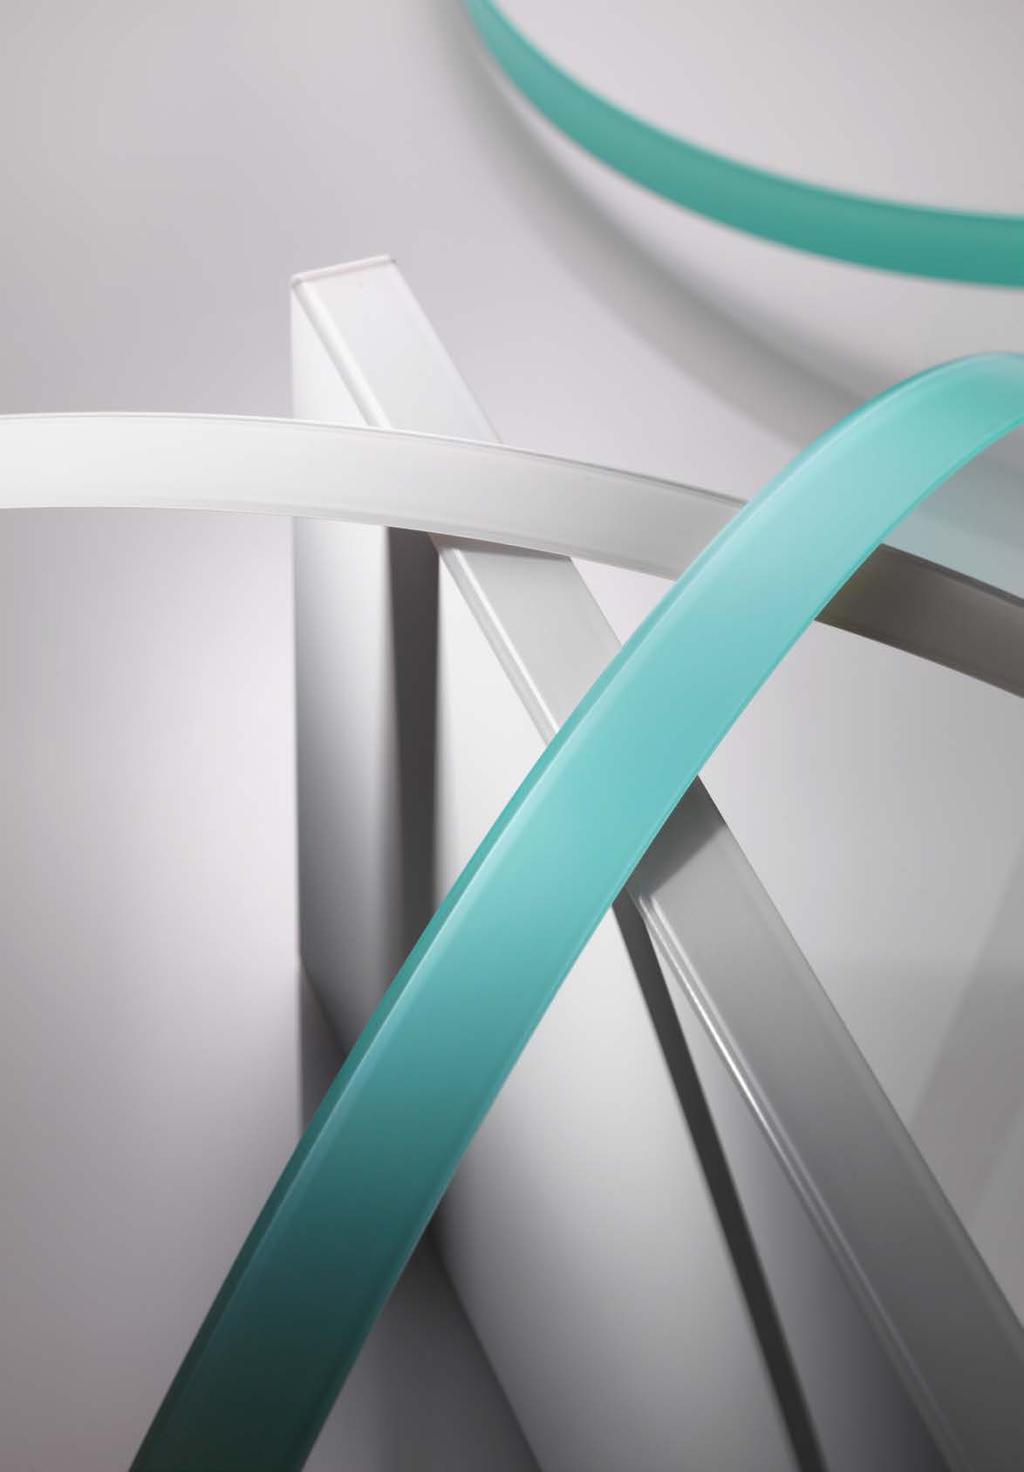 RAUKANTEX VISIONS Premium Selection: Real glass effect edgebands Real glass look!